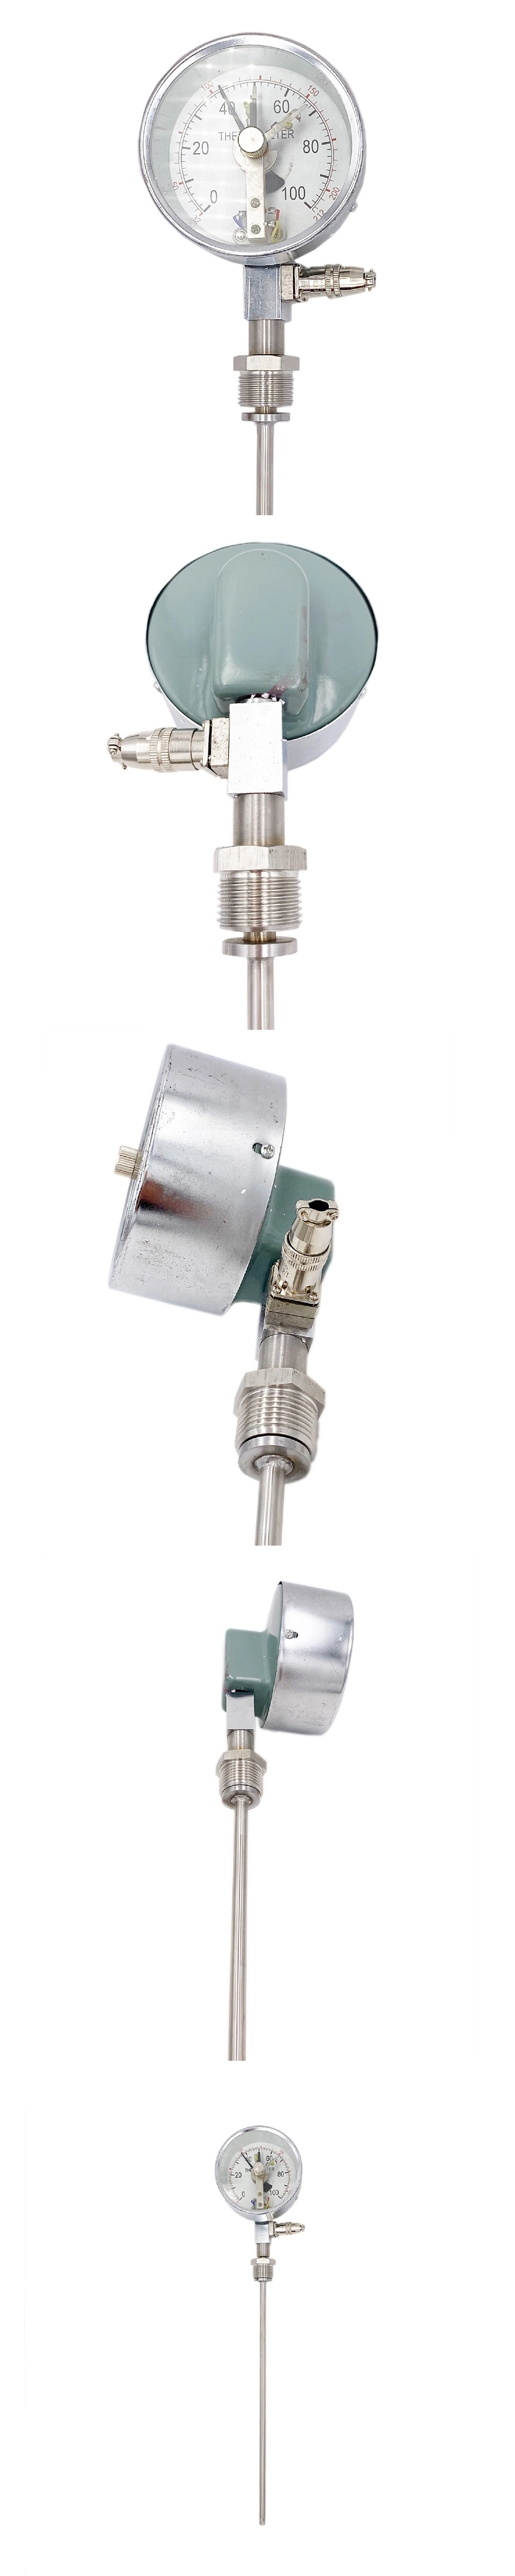 Industrial Bimetal Thermometer Sensor Transducer Temperature Sensor